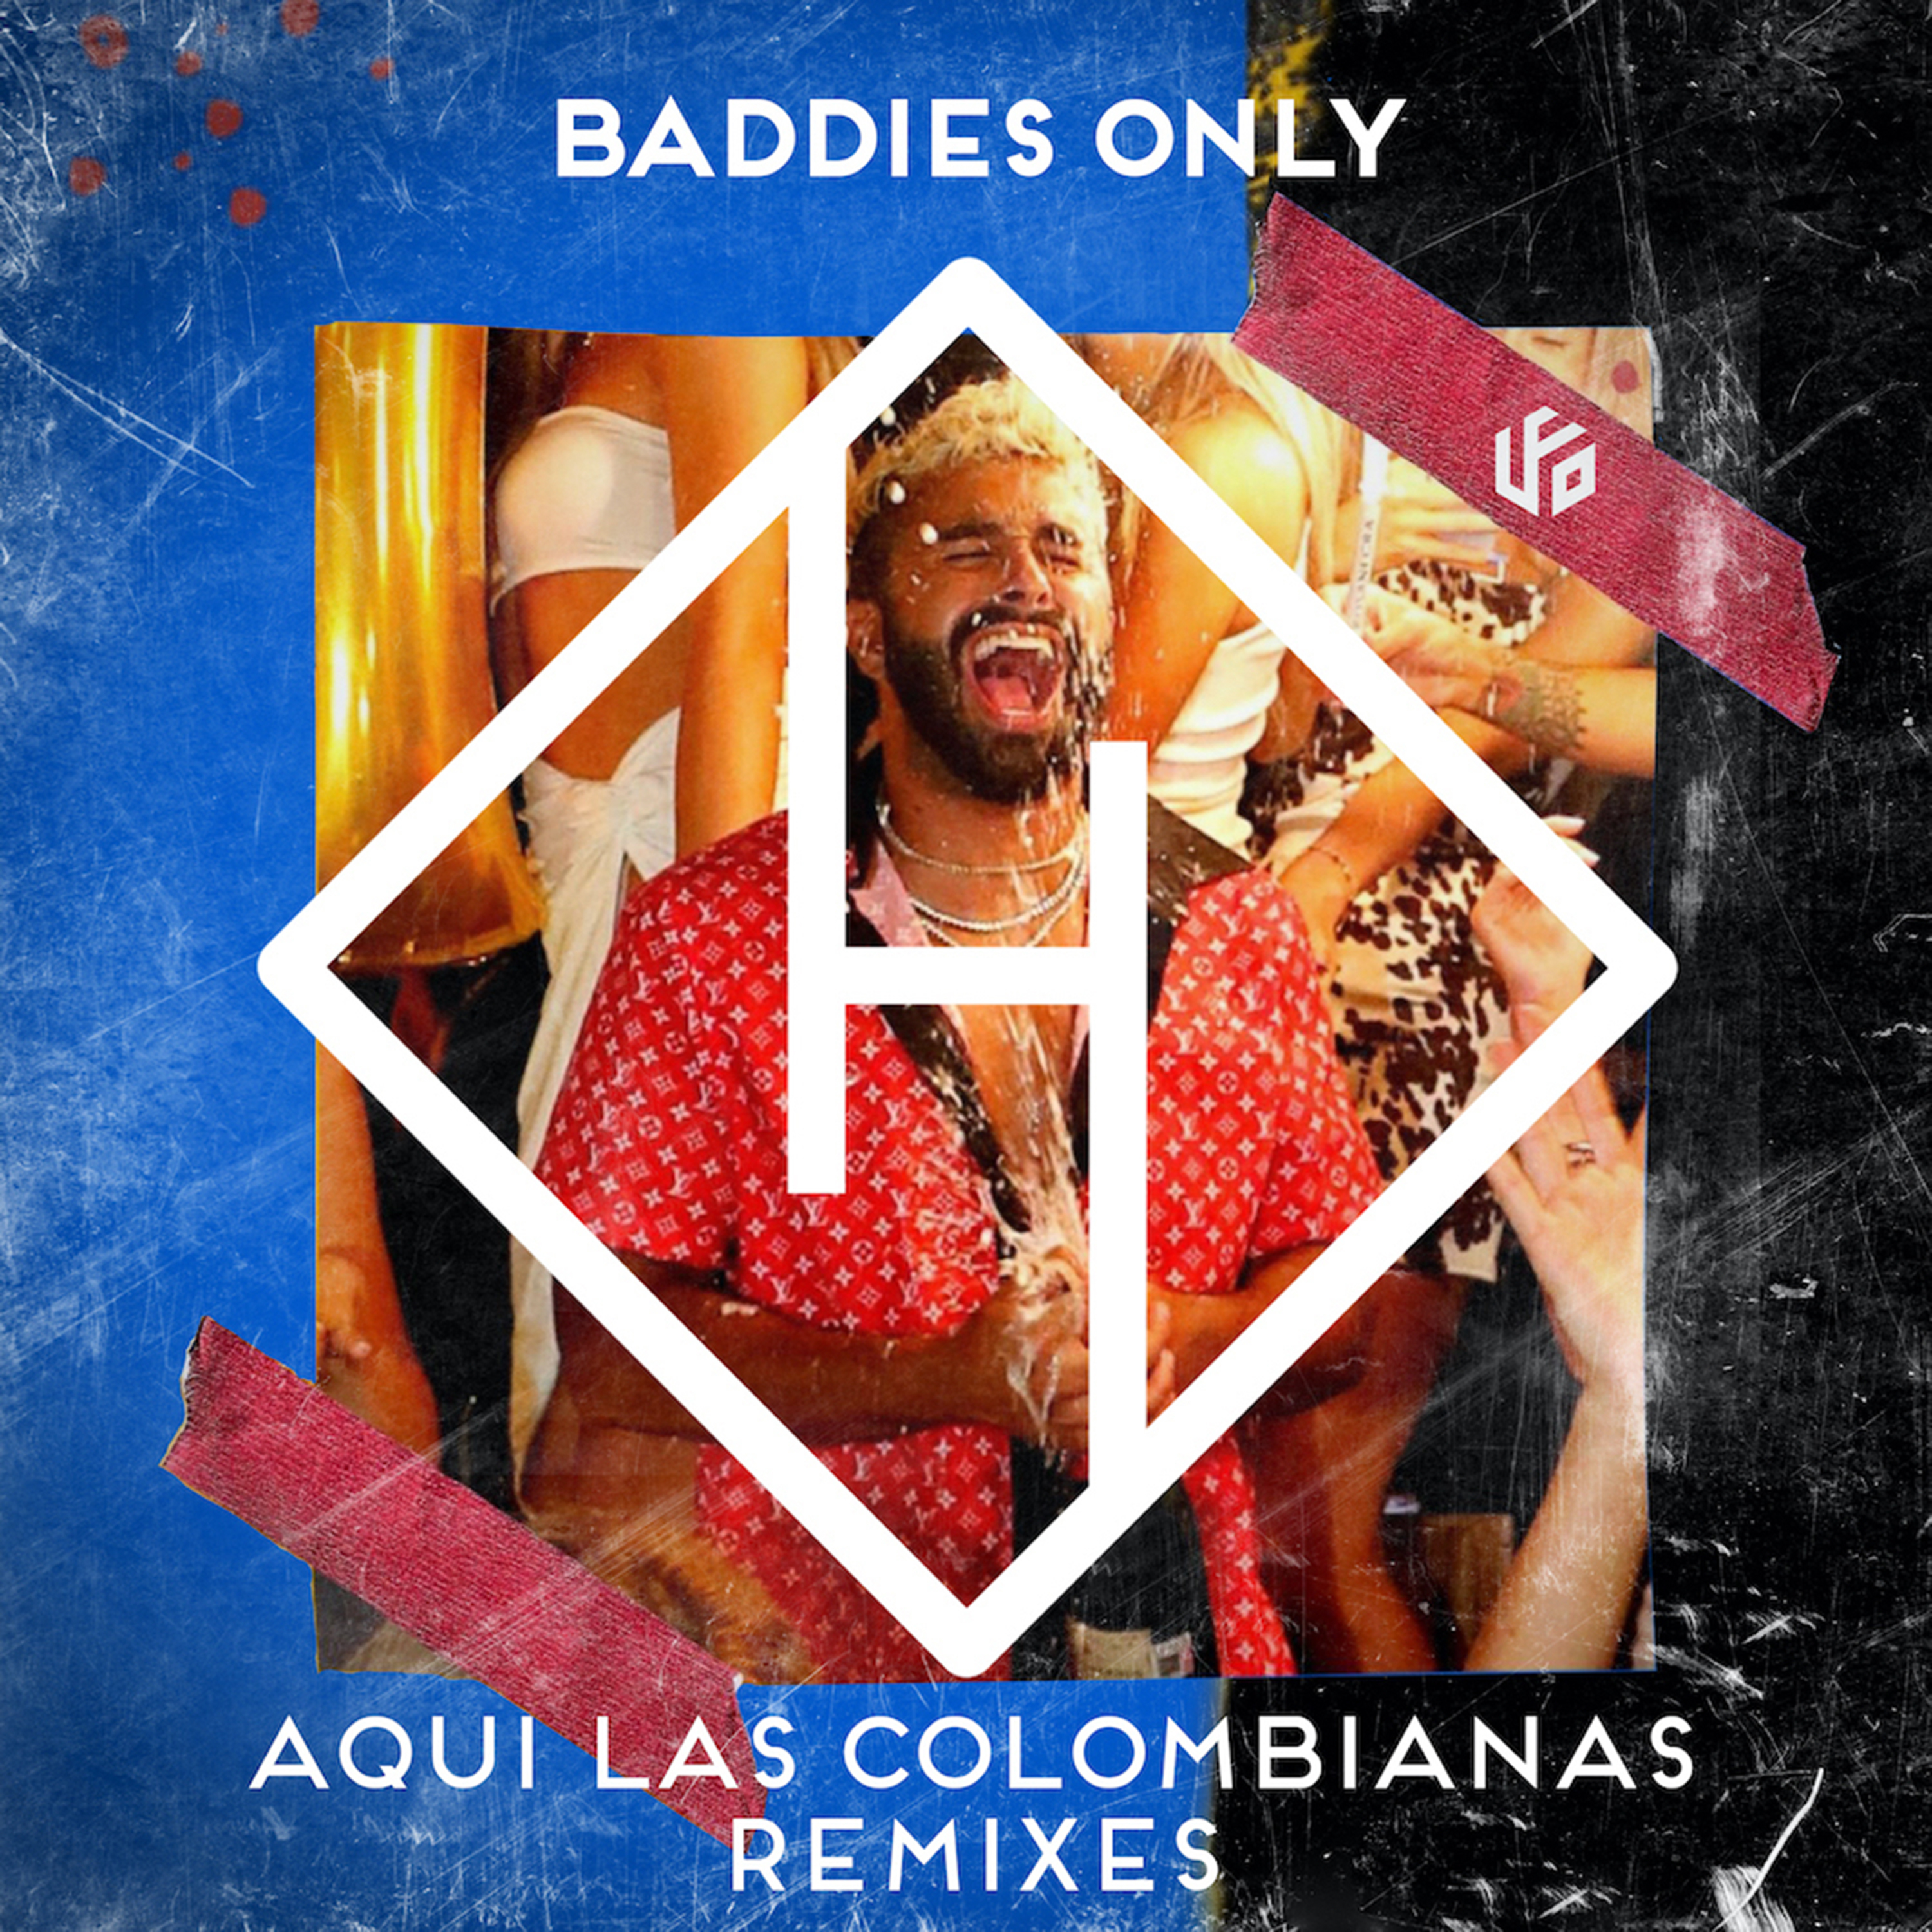 BADDIES ONLY - Aqui Las Colombianas (Remixes)